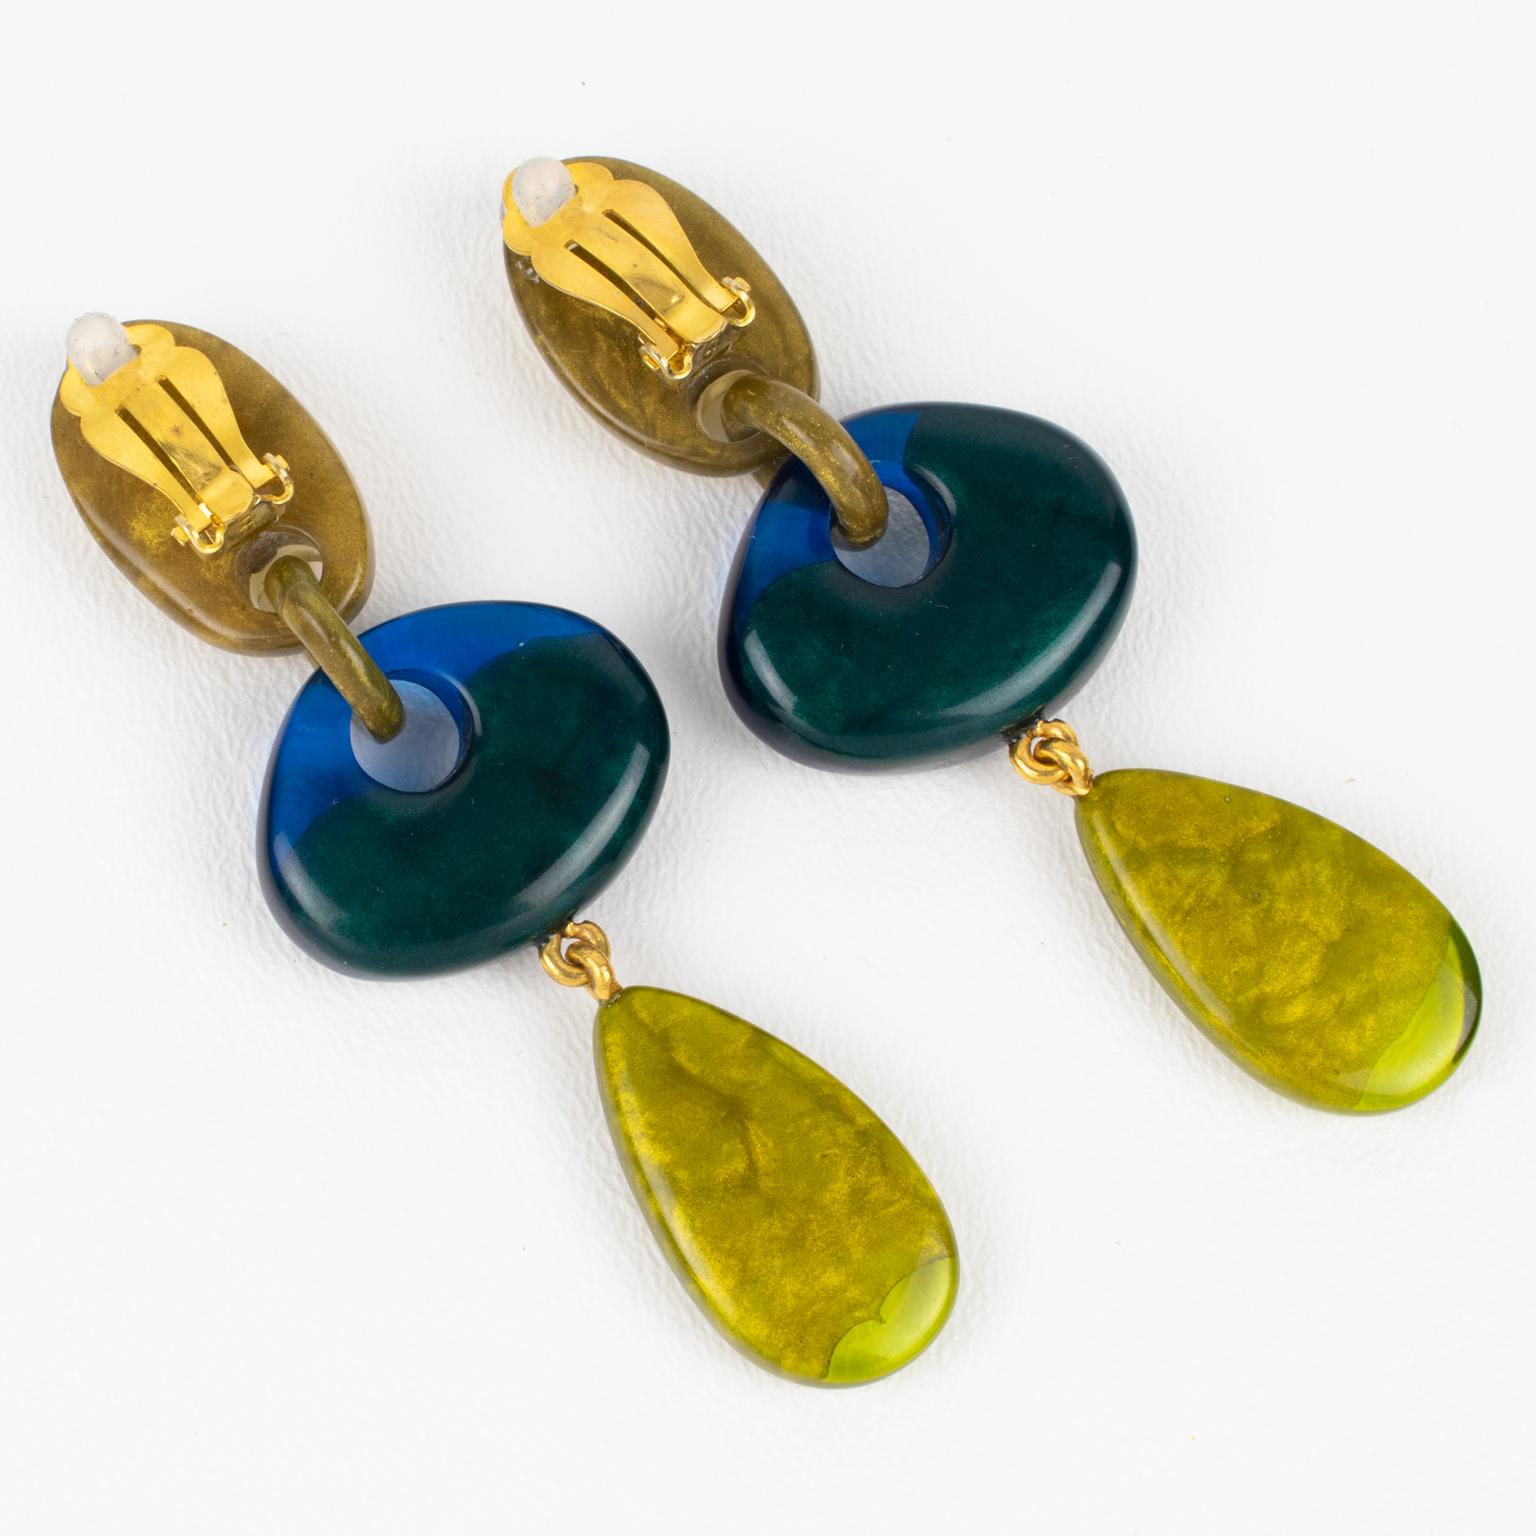 Modern Dominique Denaive Paris Blue and Green Pearlized Resin Dangle Clip Earrings